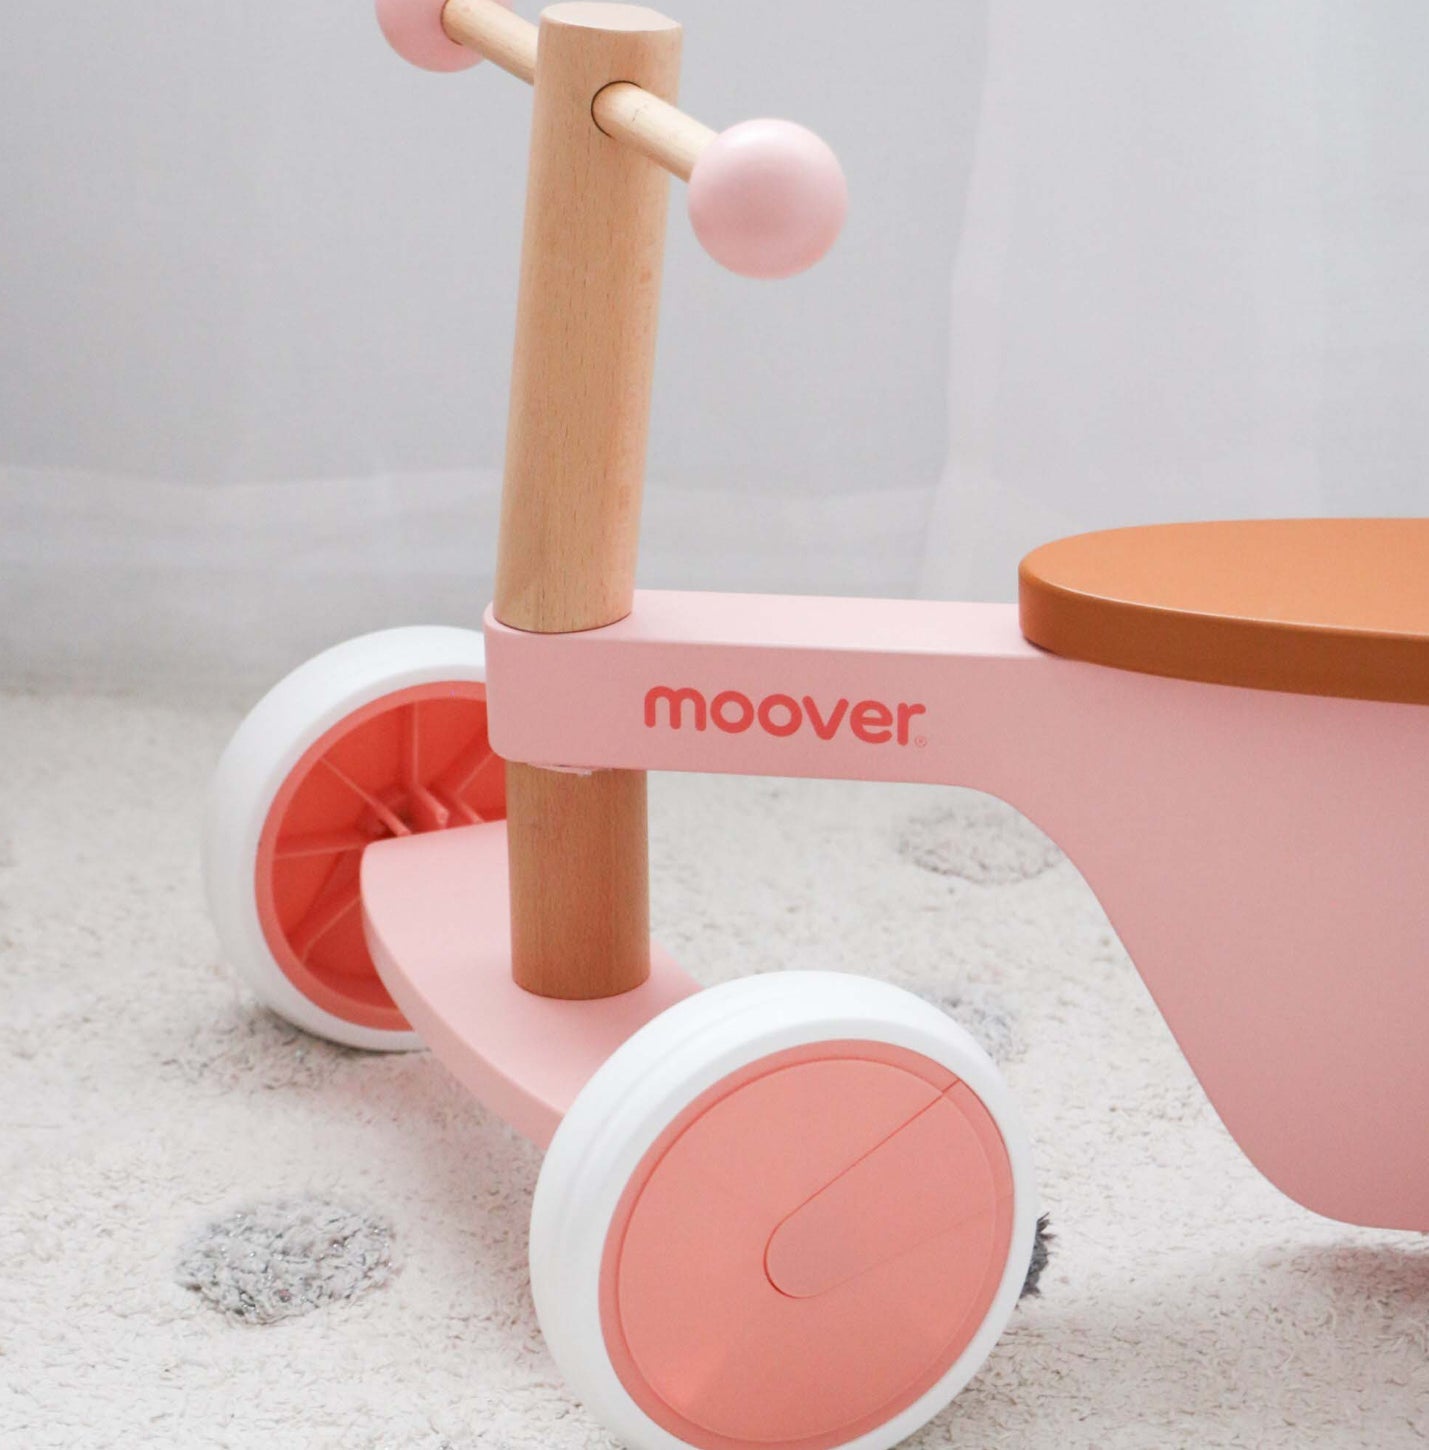 Moover Ride-On Bike Pink